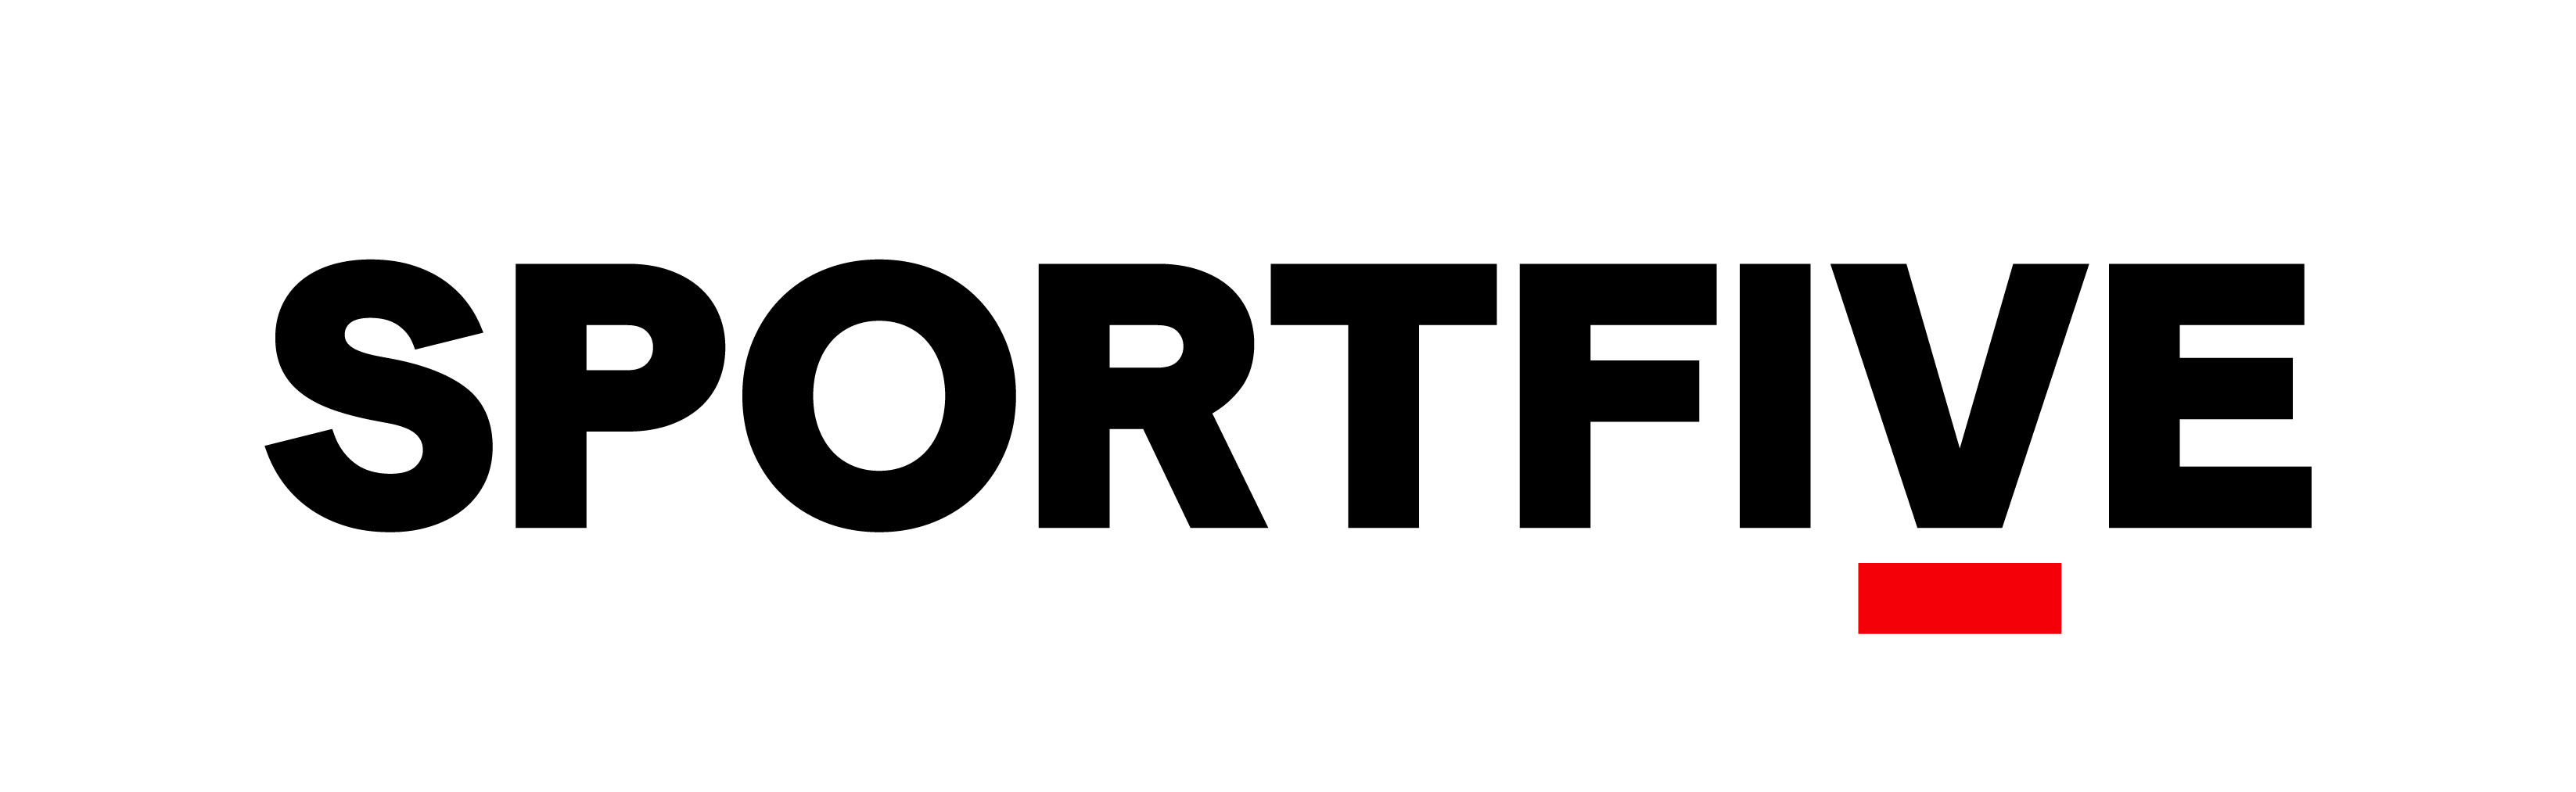 sportfive logo